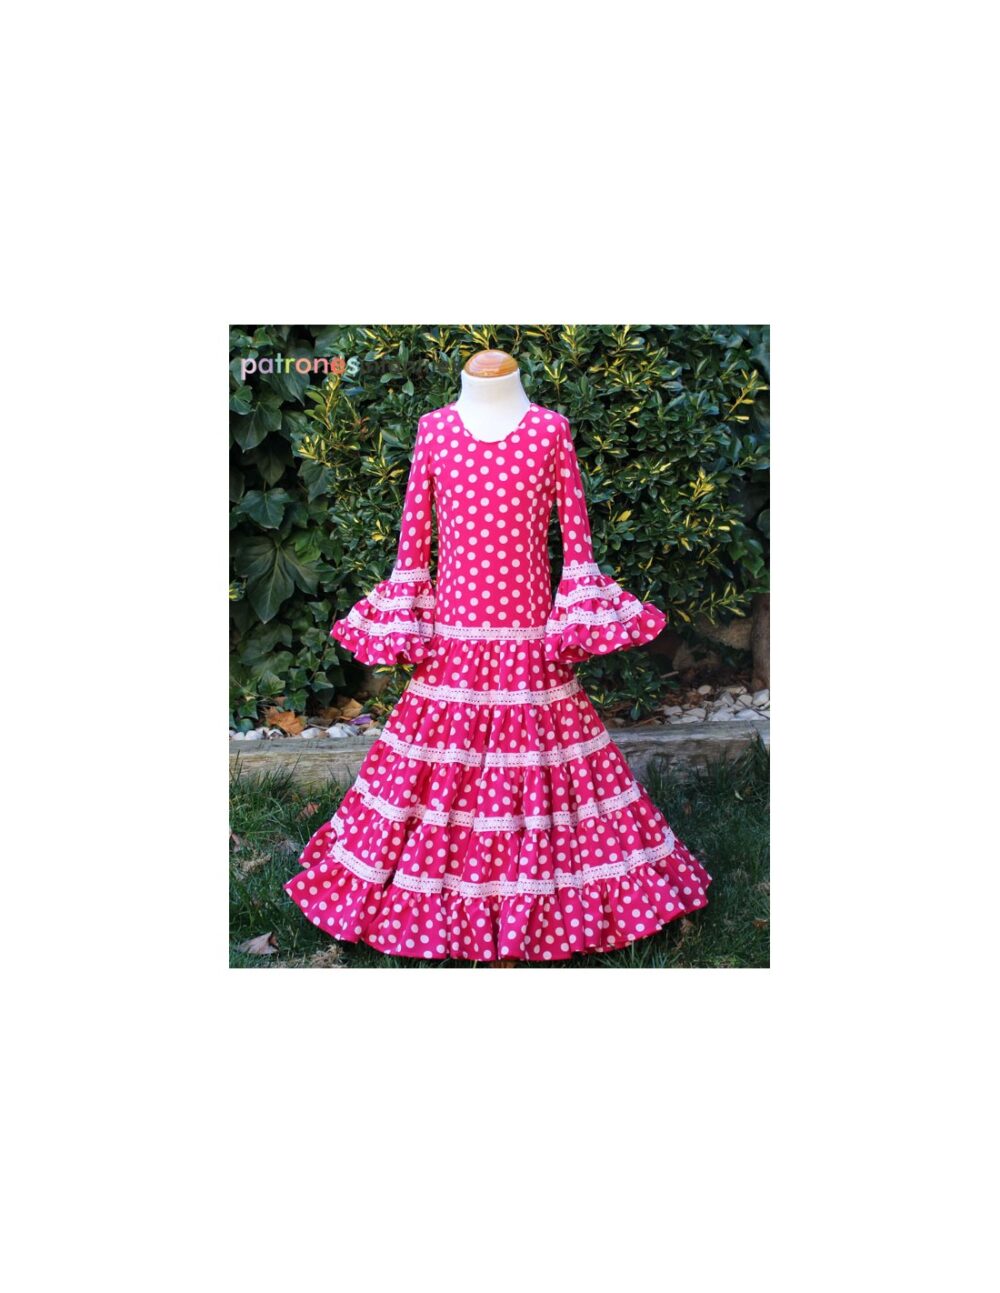 Patrón de vestido flamenca de niña canastero